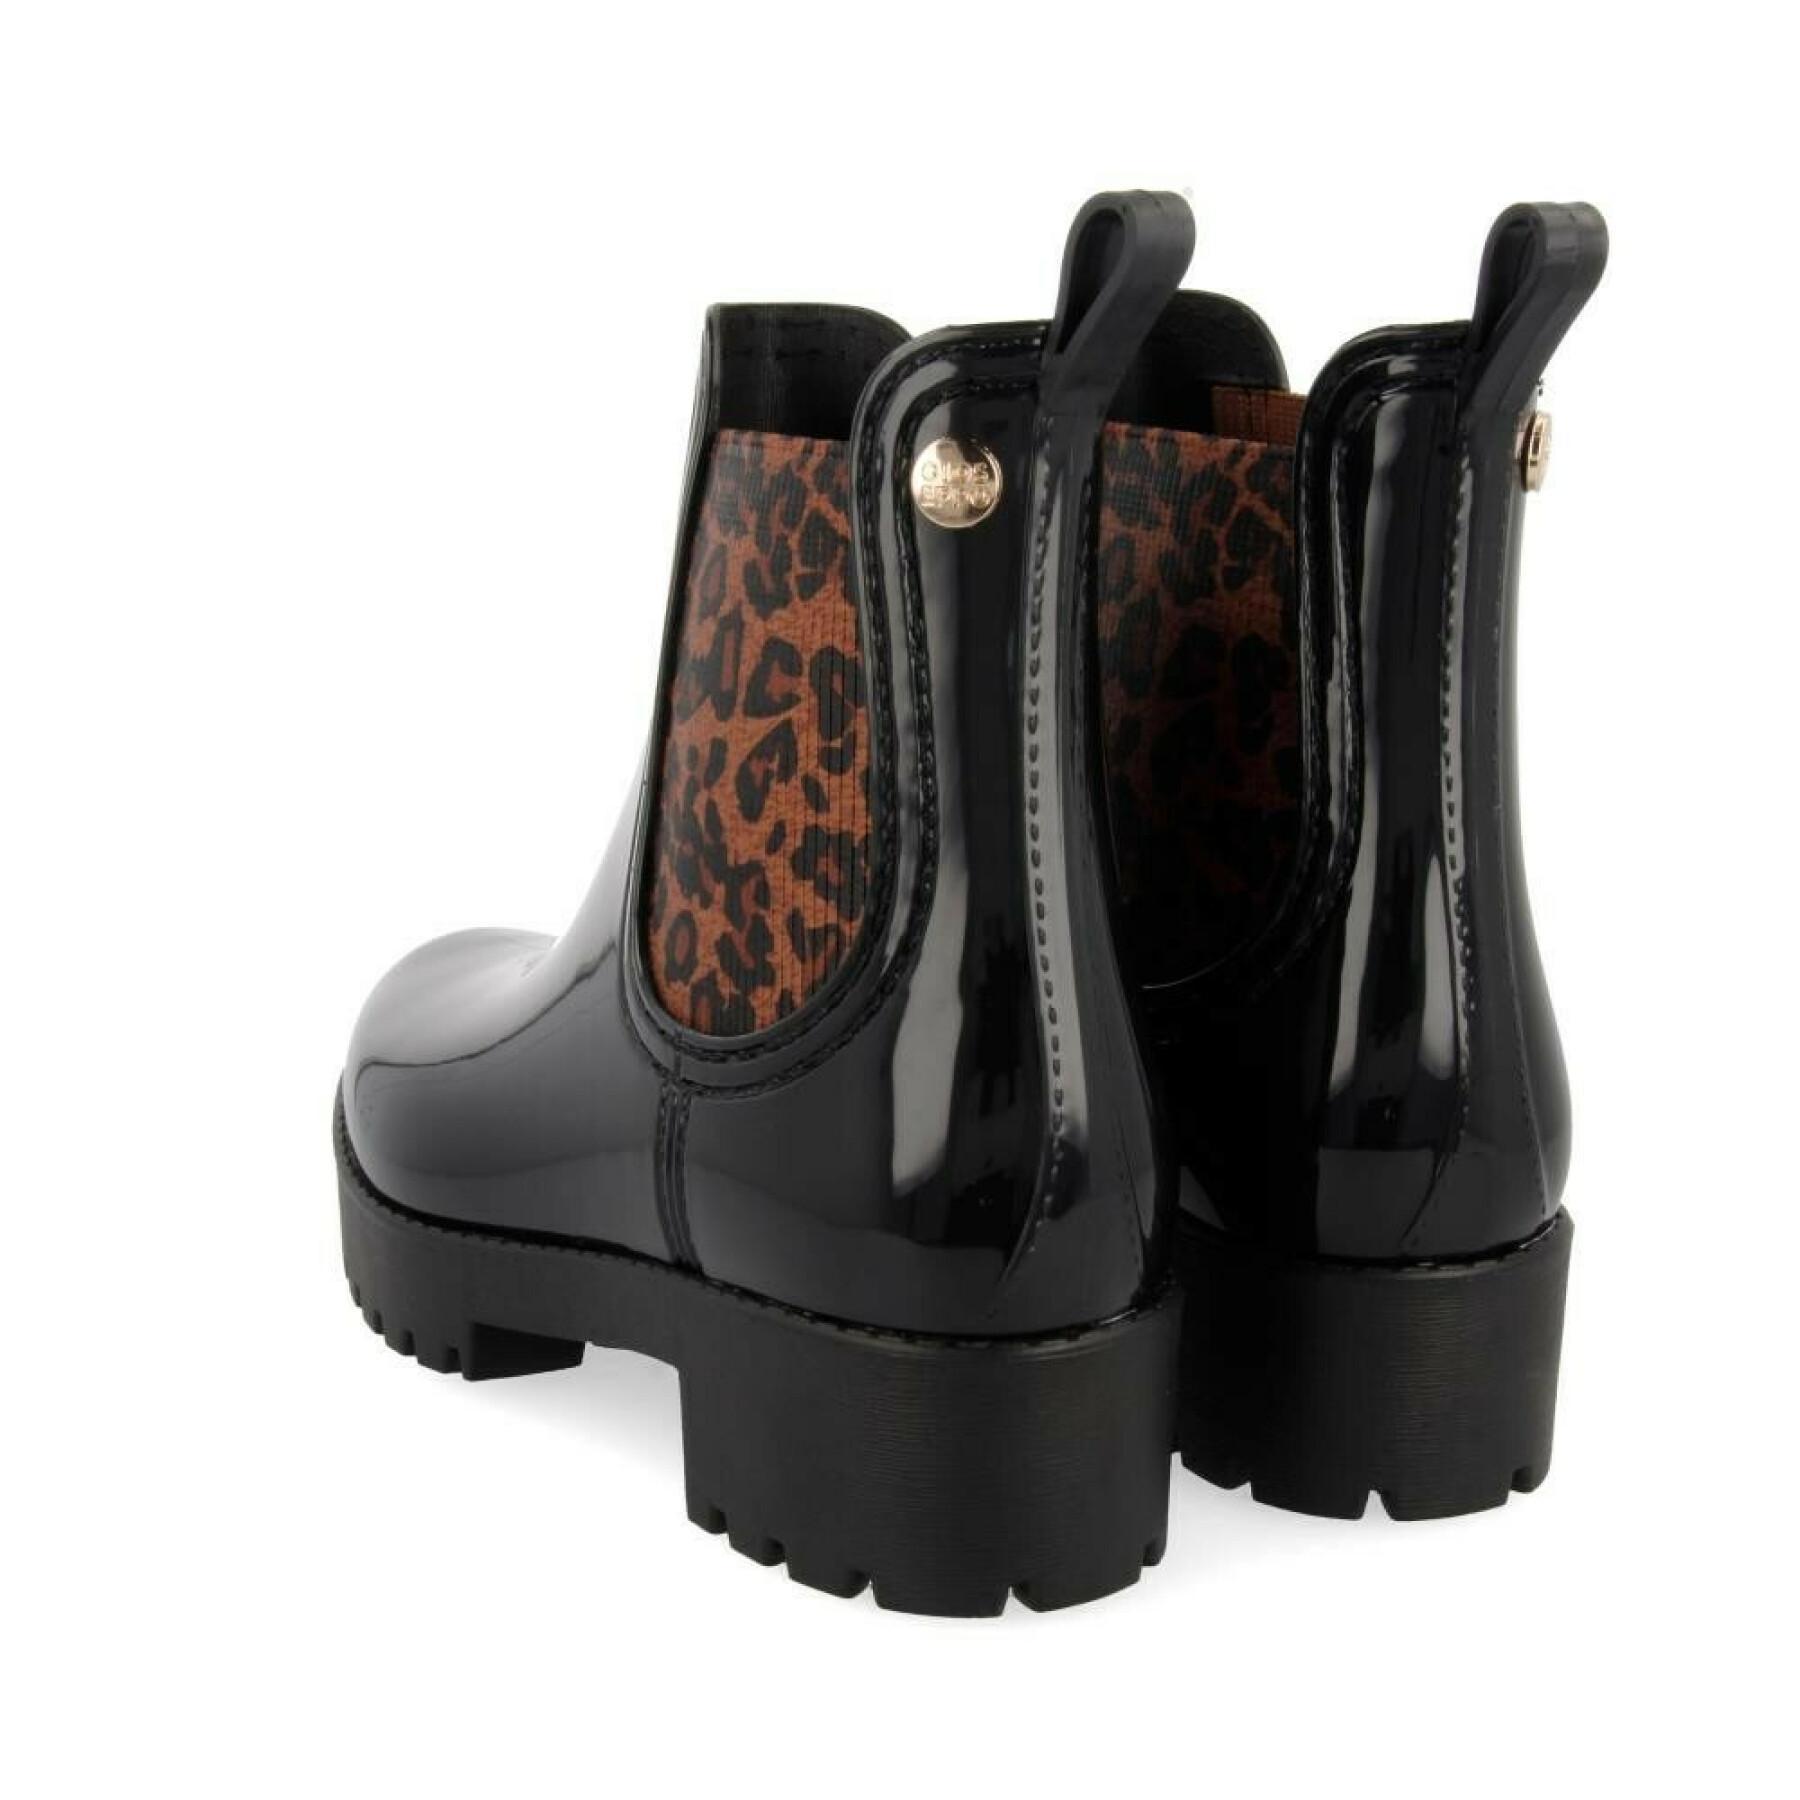 Botas de mujer Gioseppo brillantes noires à motif léopard